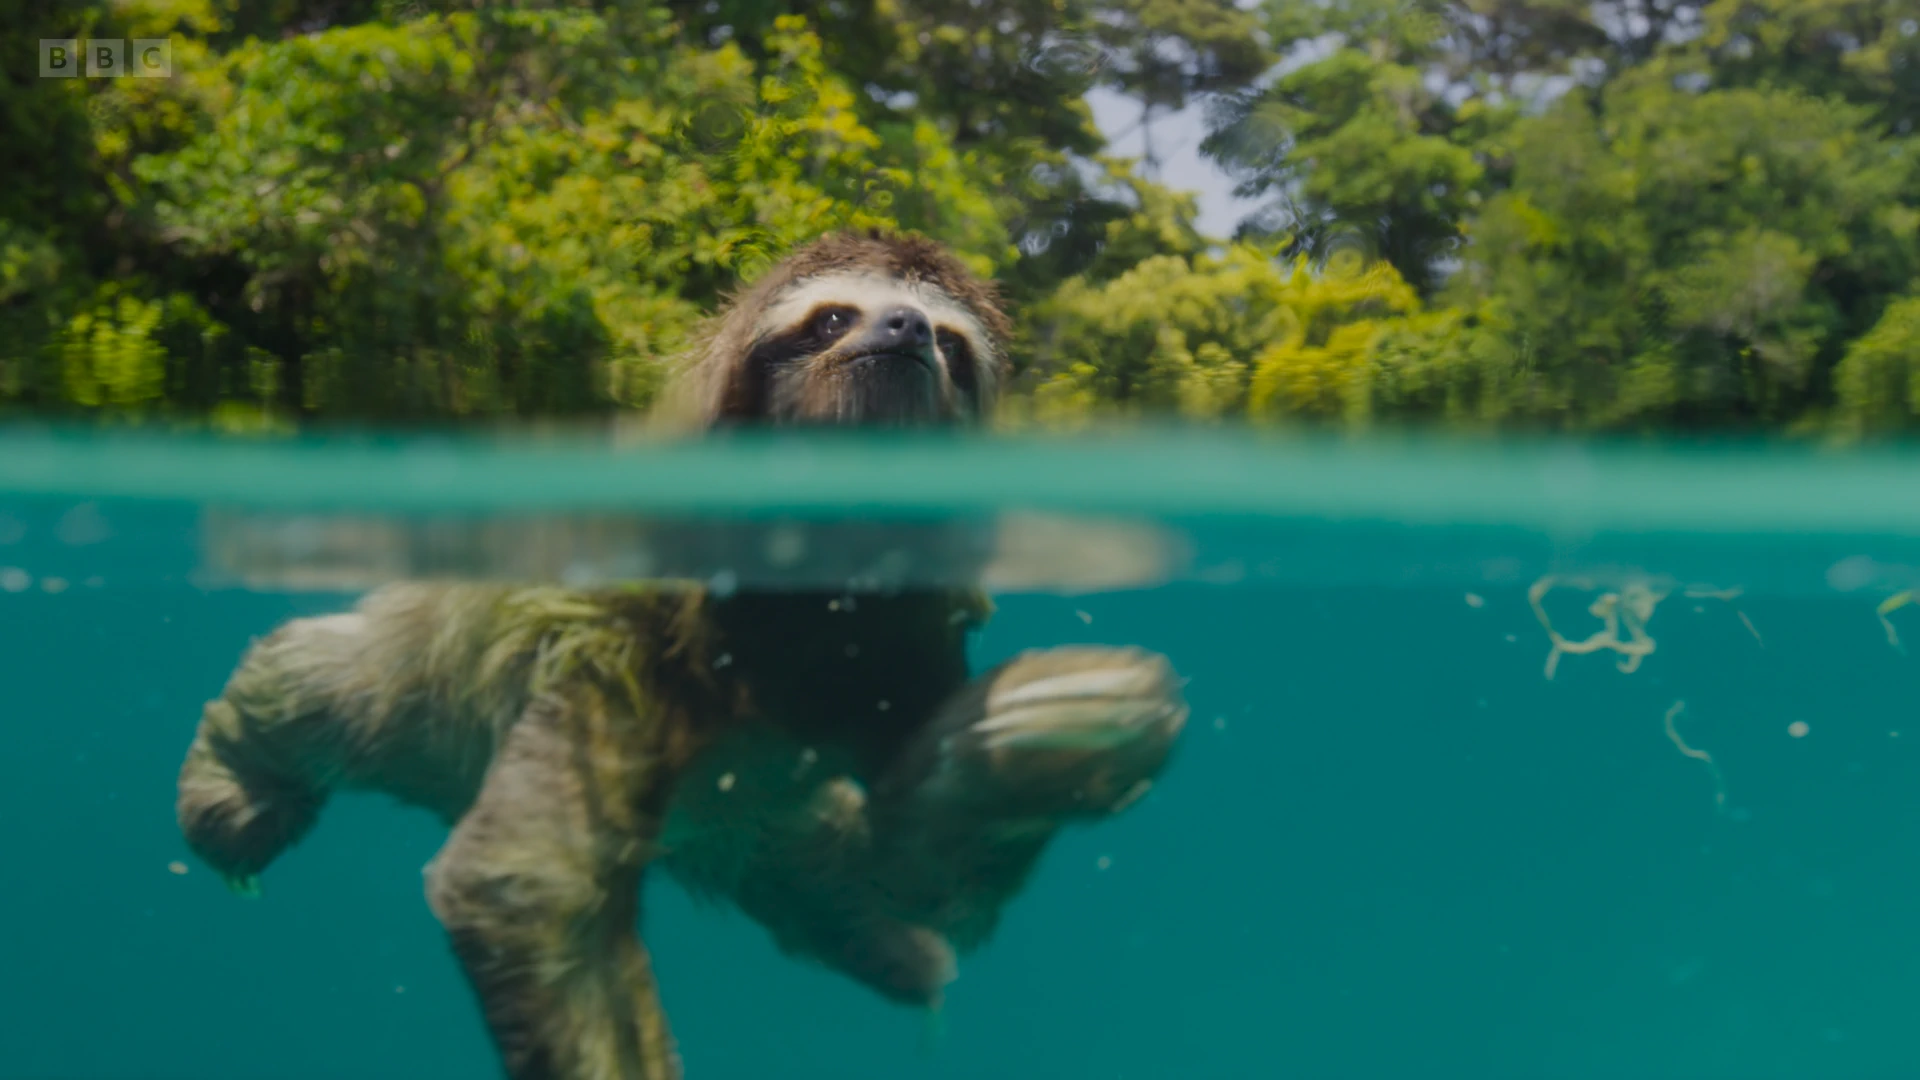 Pygmy three-toed sloth (Bradypus pygmaeus) as shown in Planet Earth II - Islands